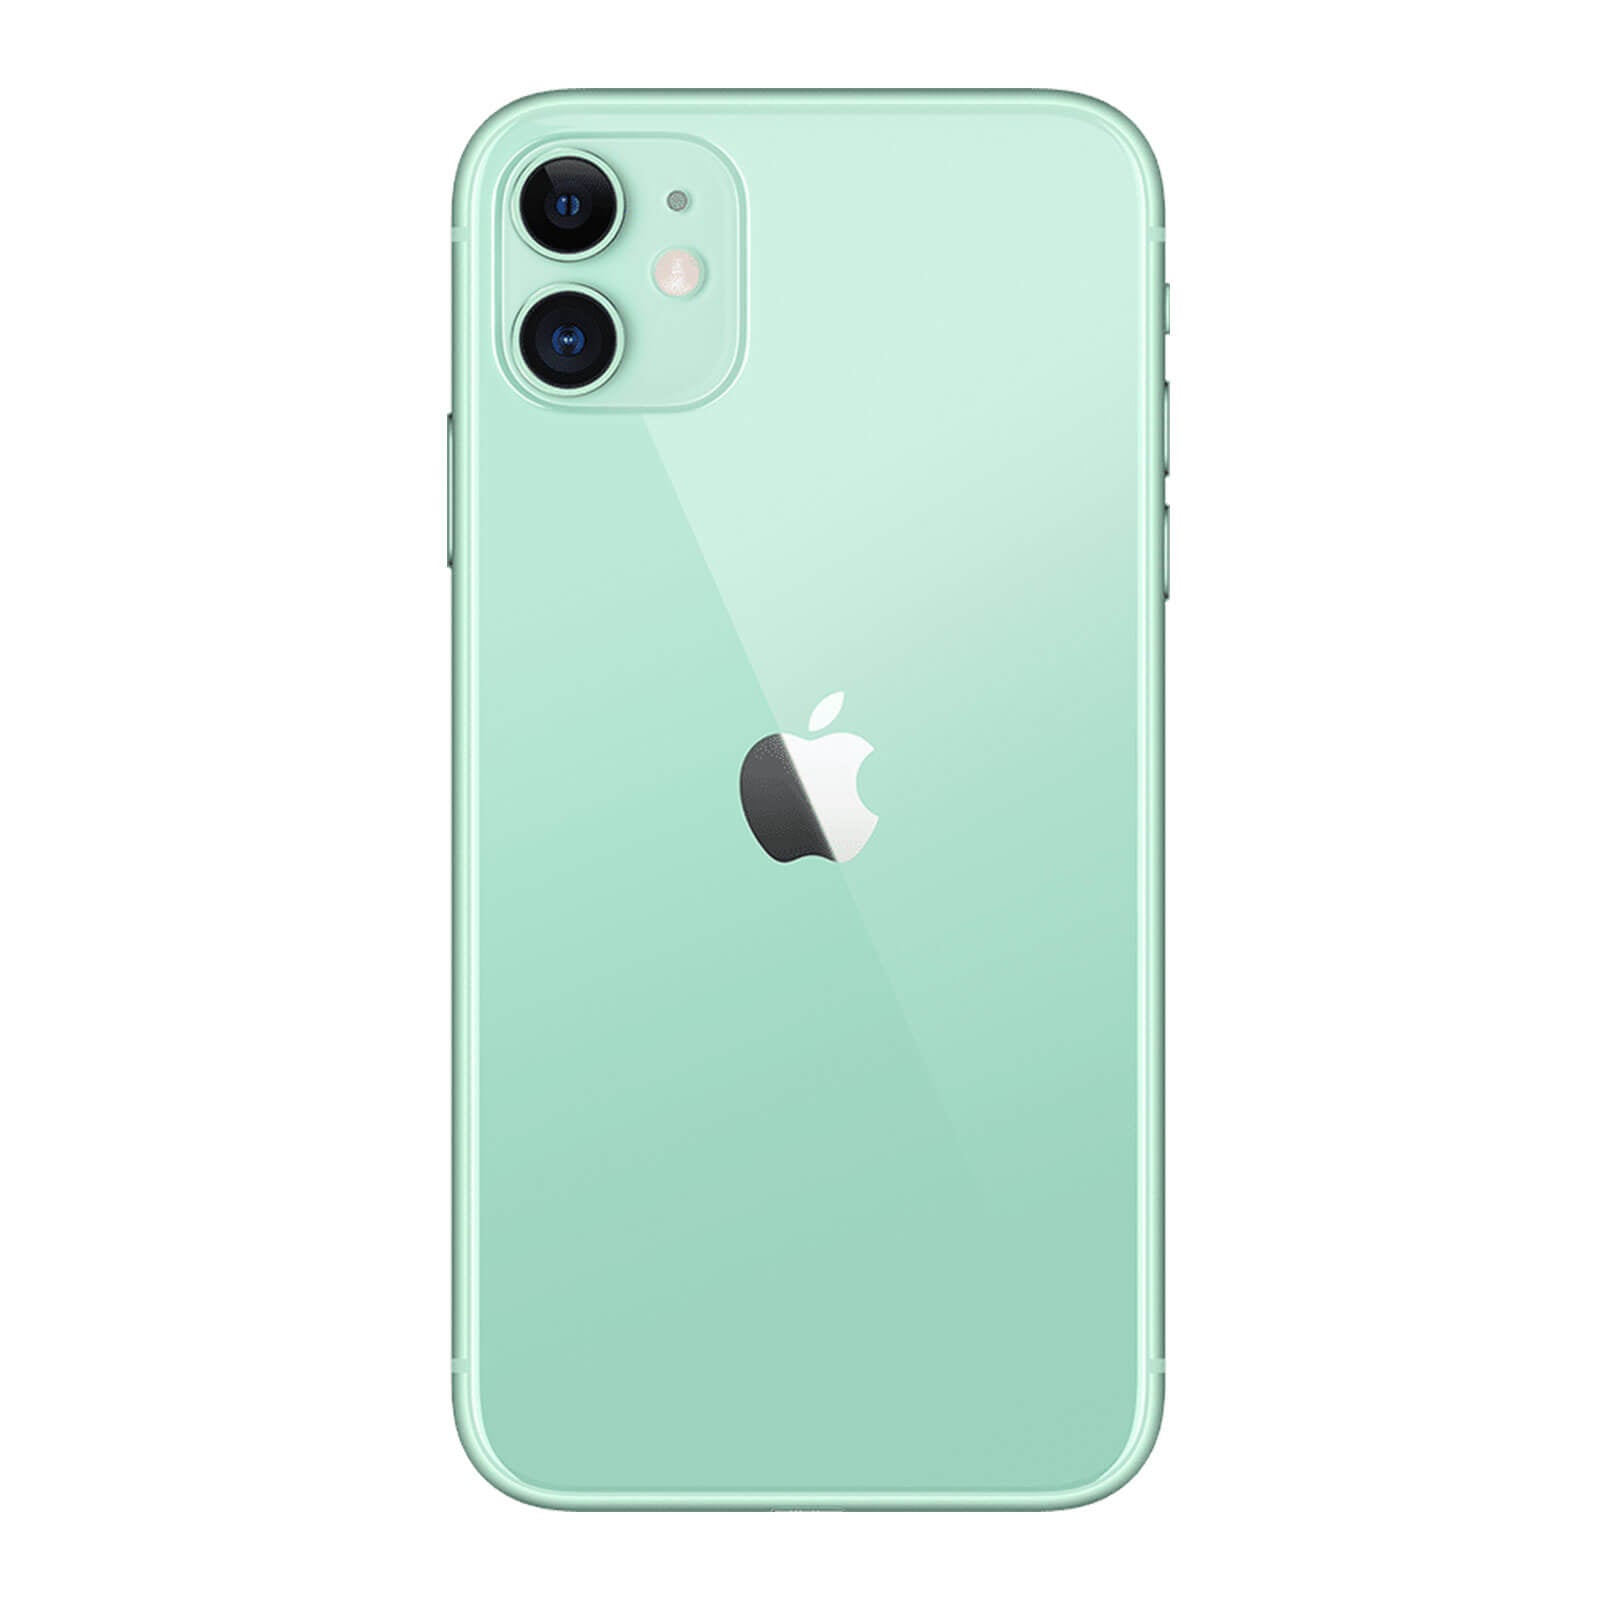 Apple iPhone 11 256GB Green Pristine - Unlocked